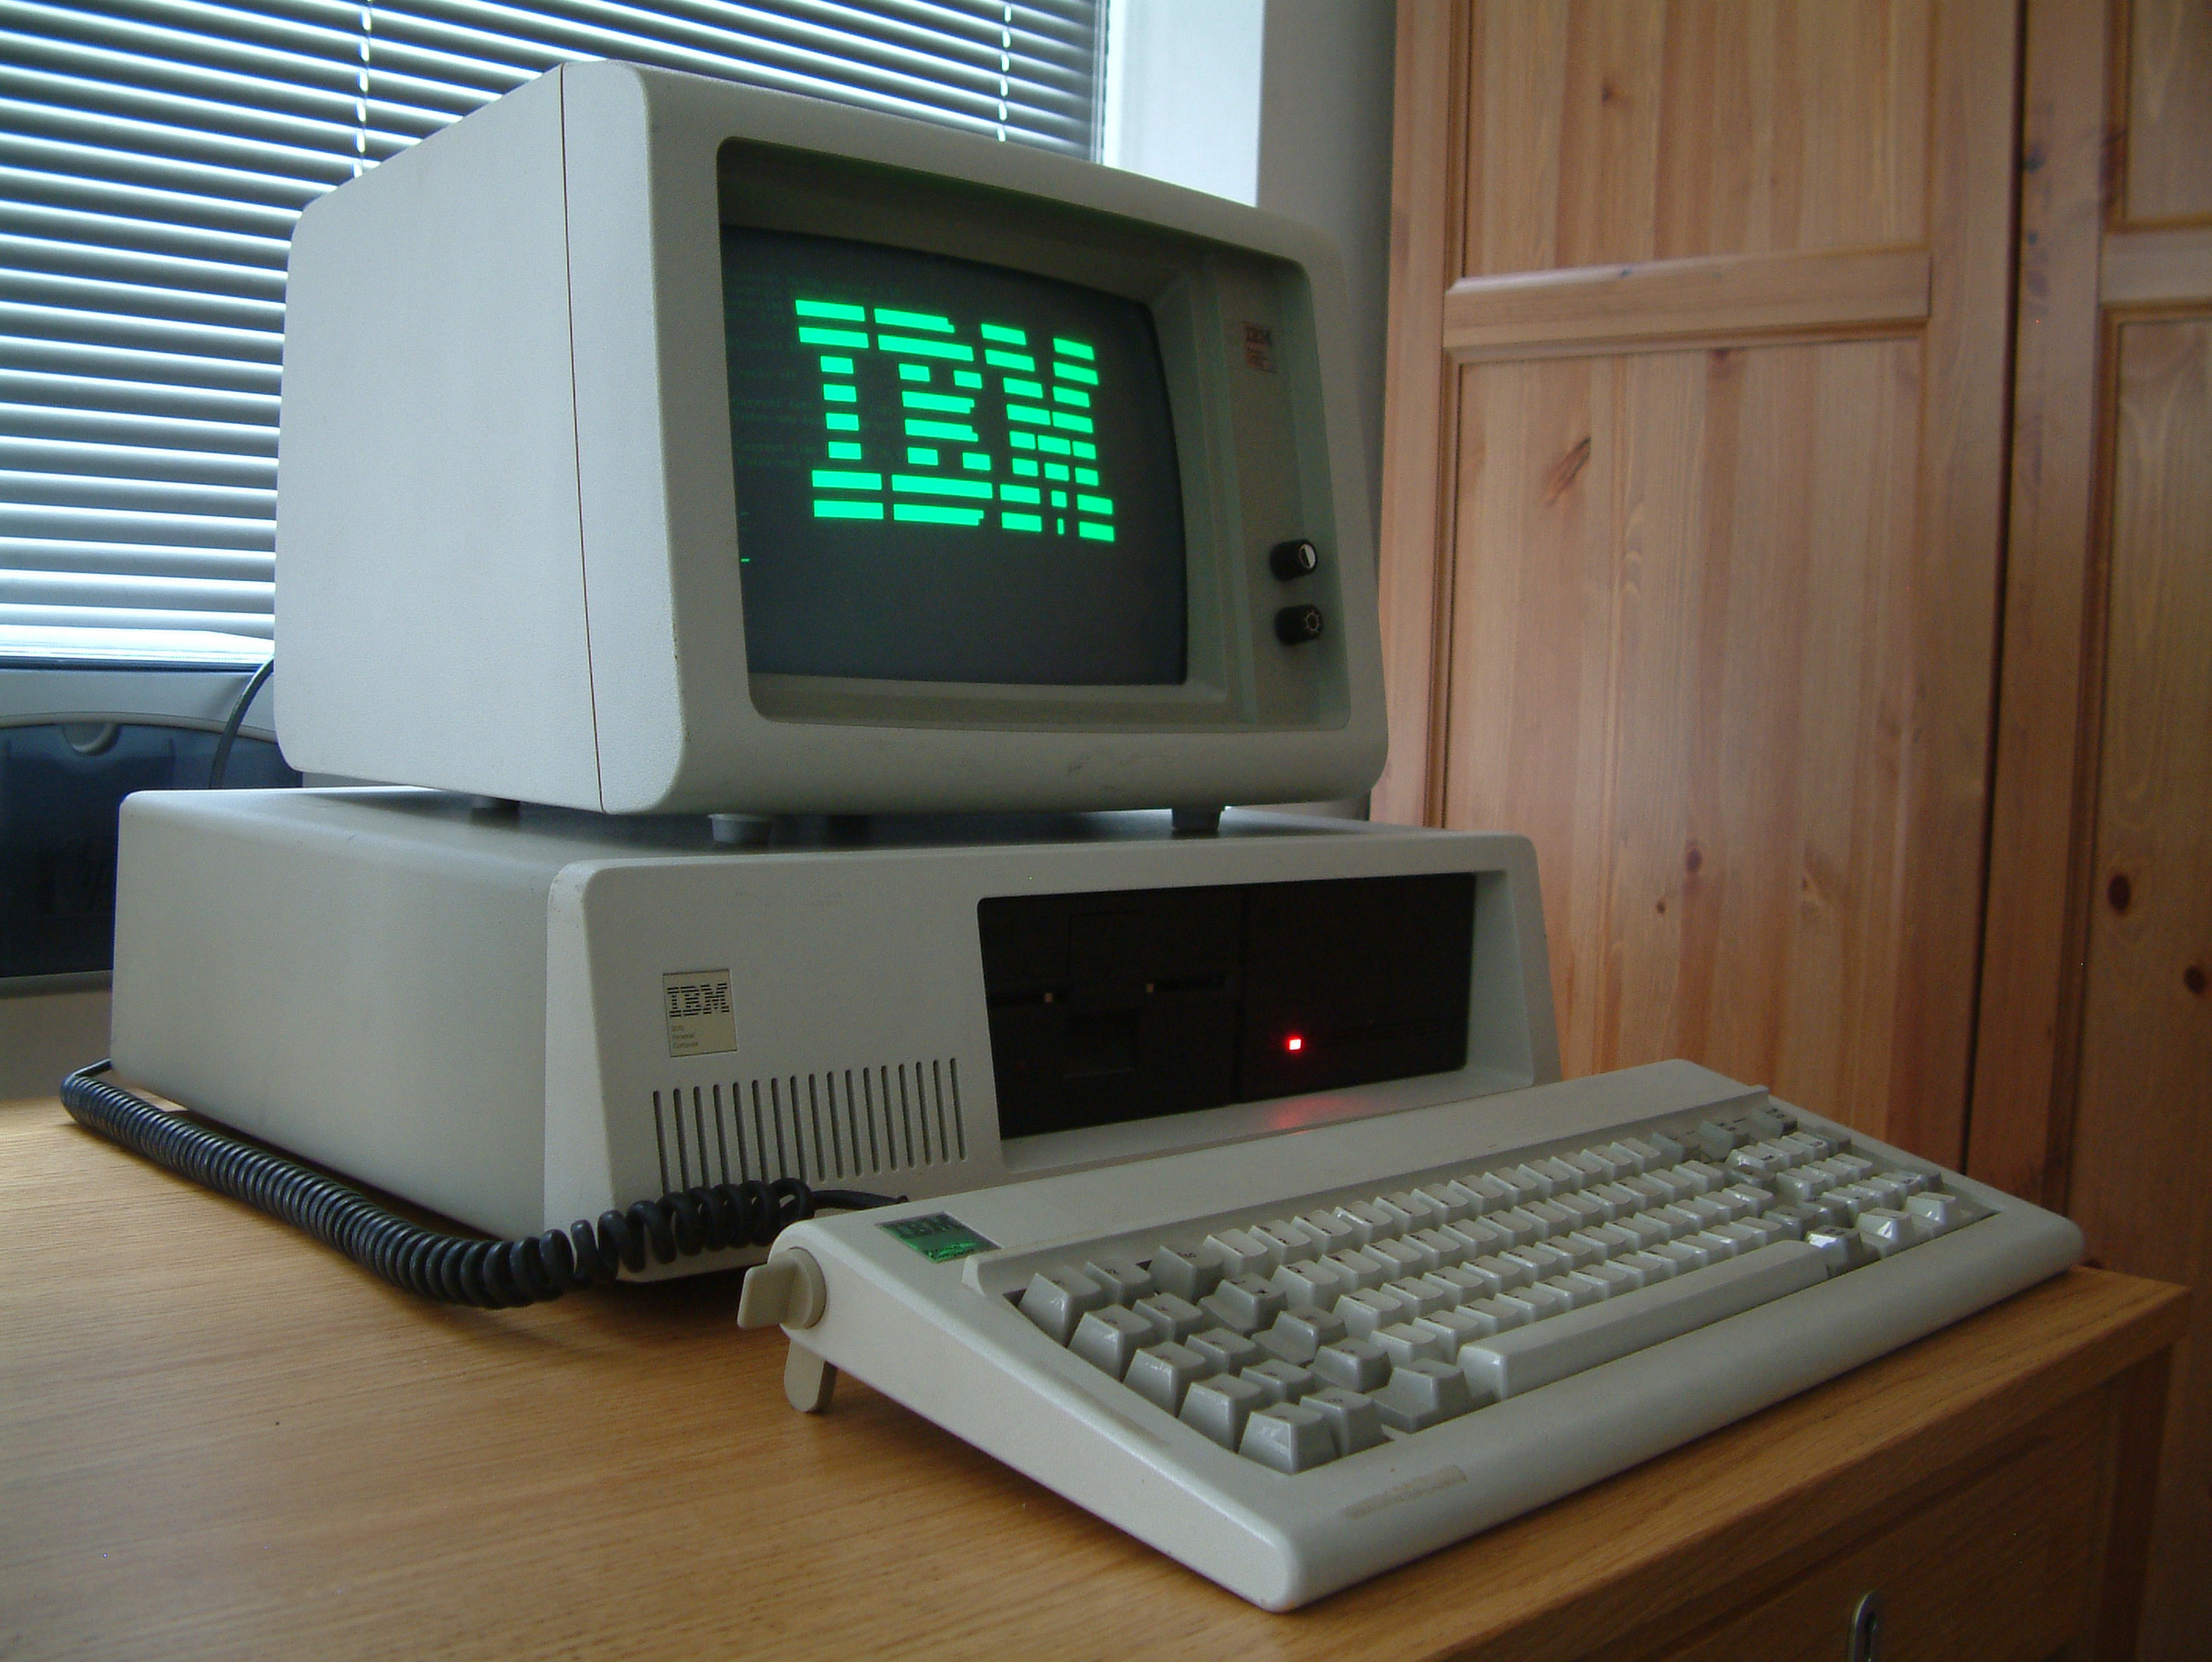 IBM PC with MDA monitor. [4]